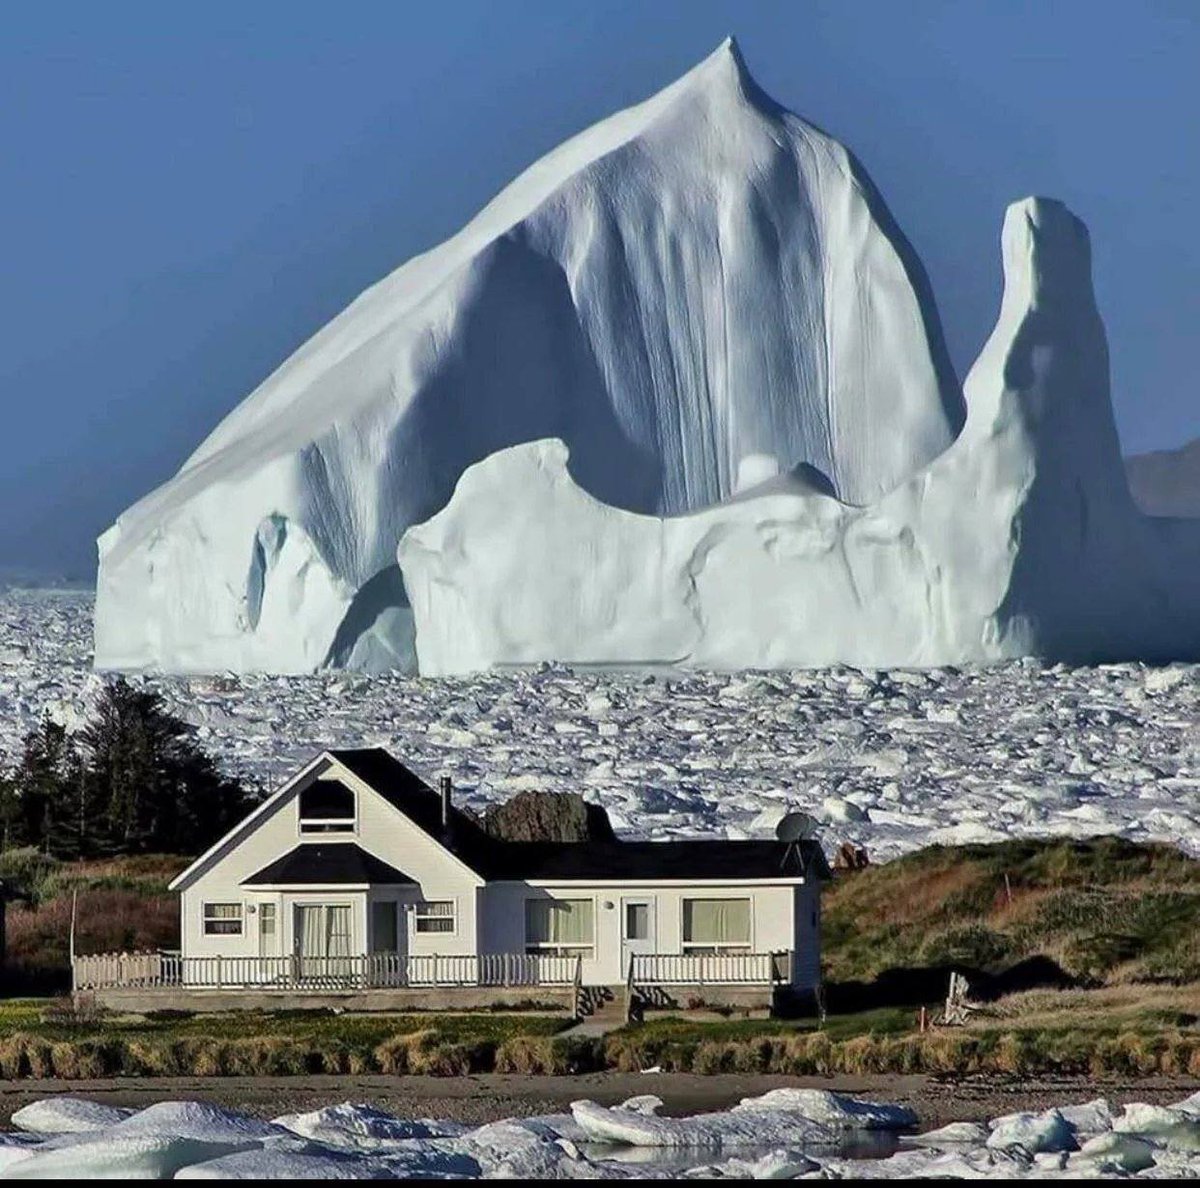 4. A colossal Iceberg drifts through Iceberg Alley, in Newfoundland, Canada